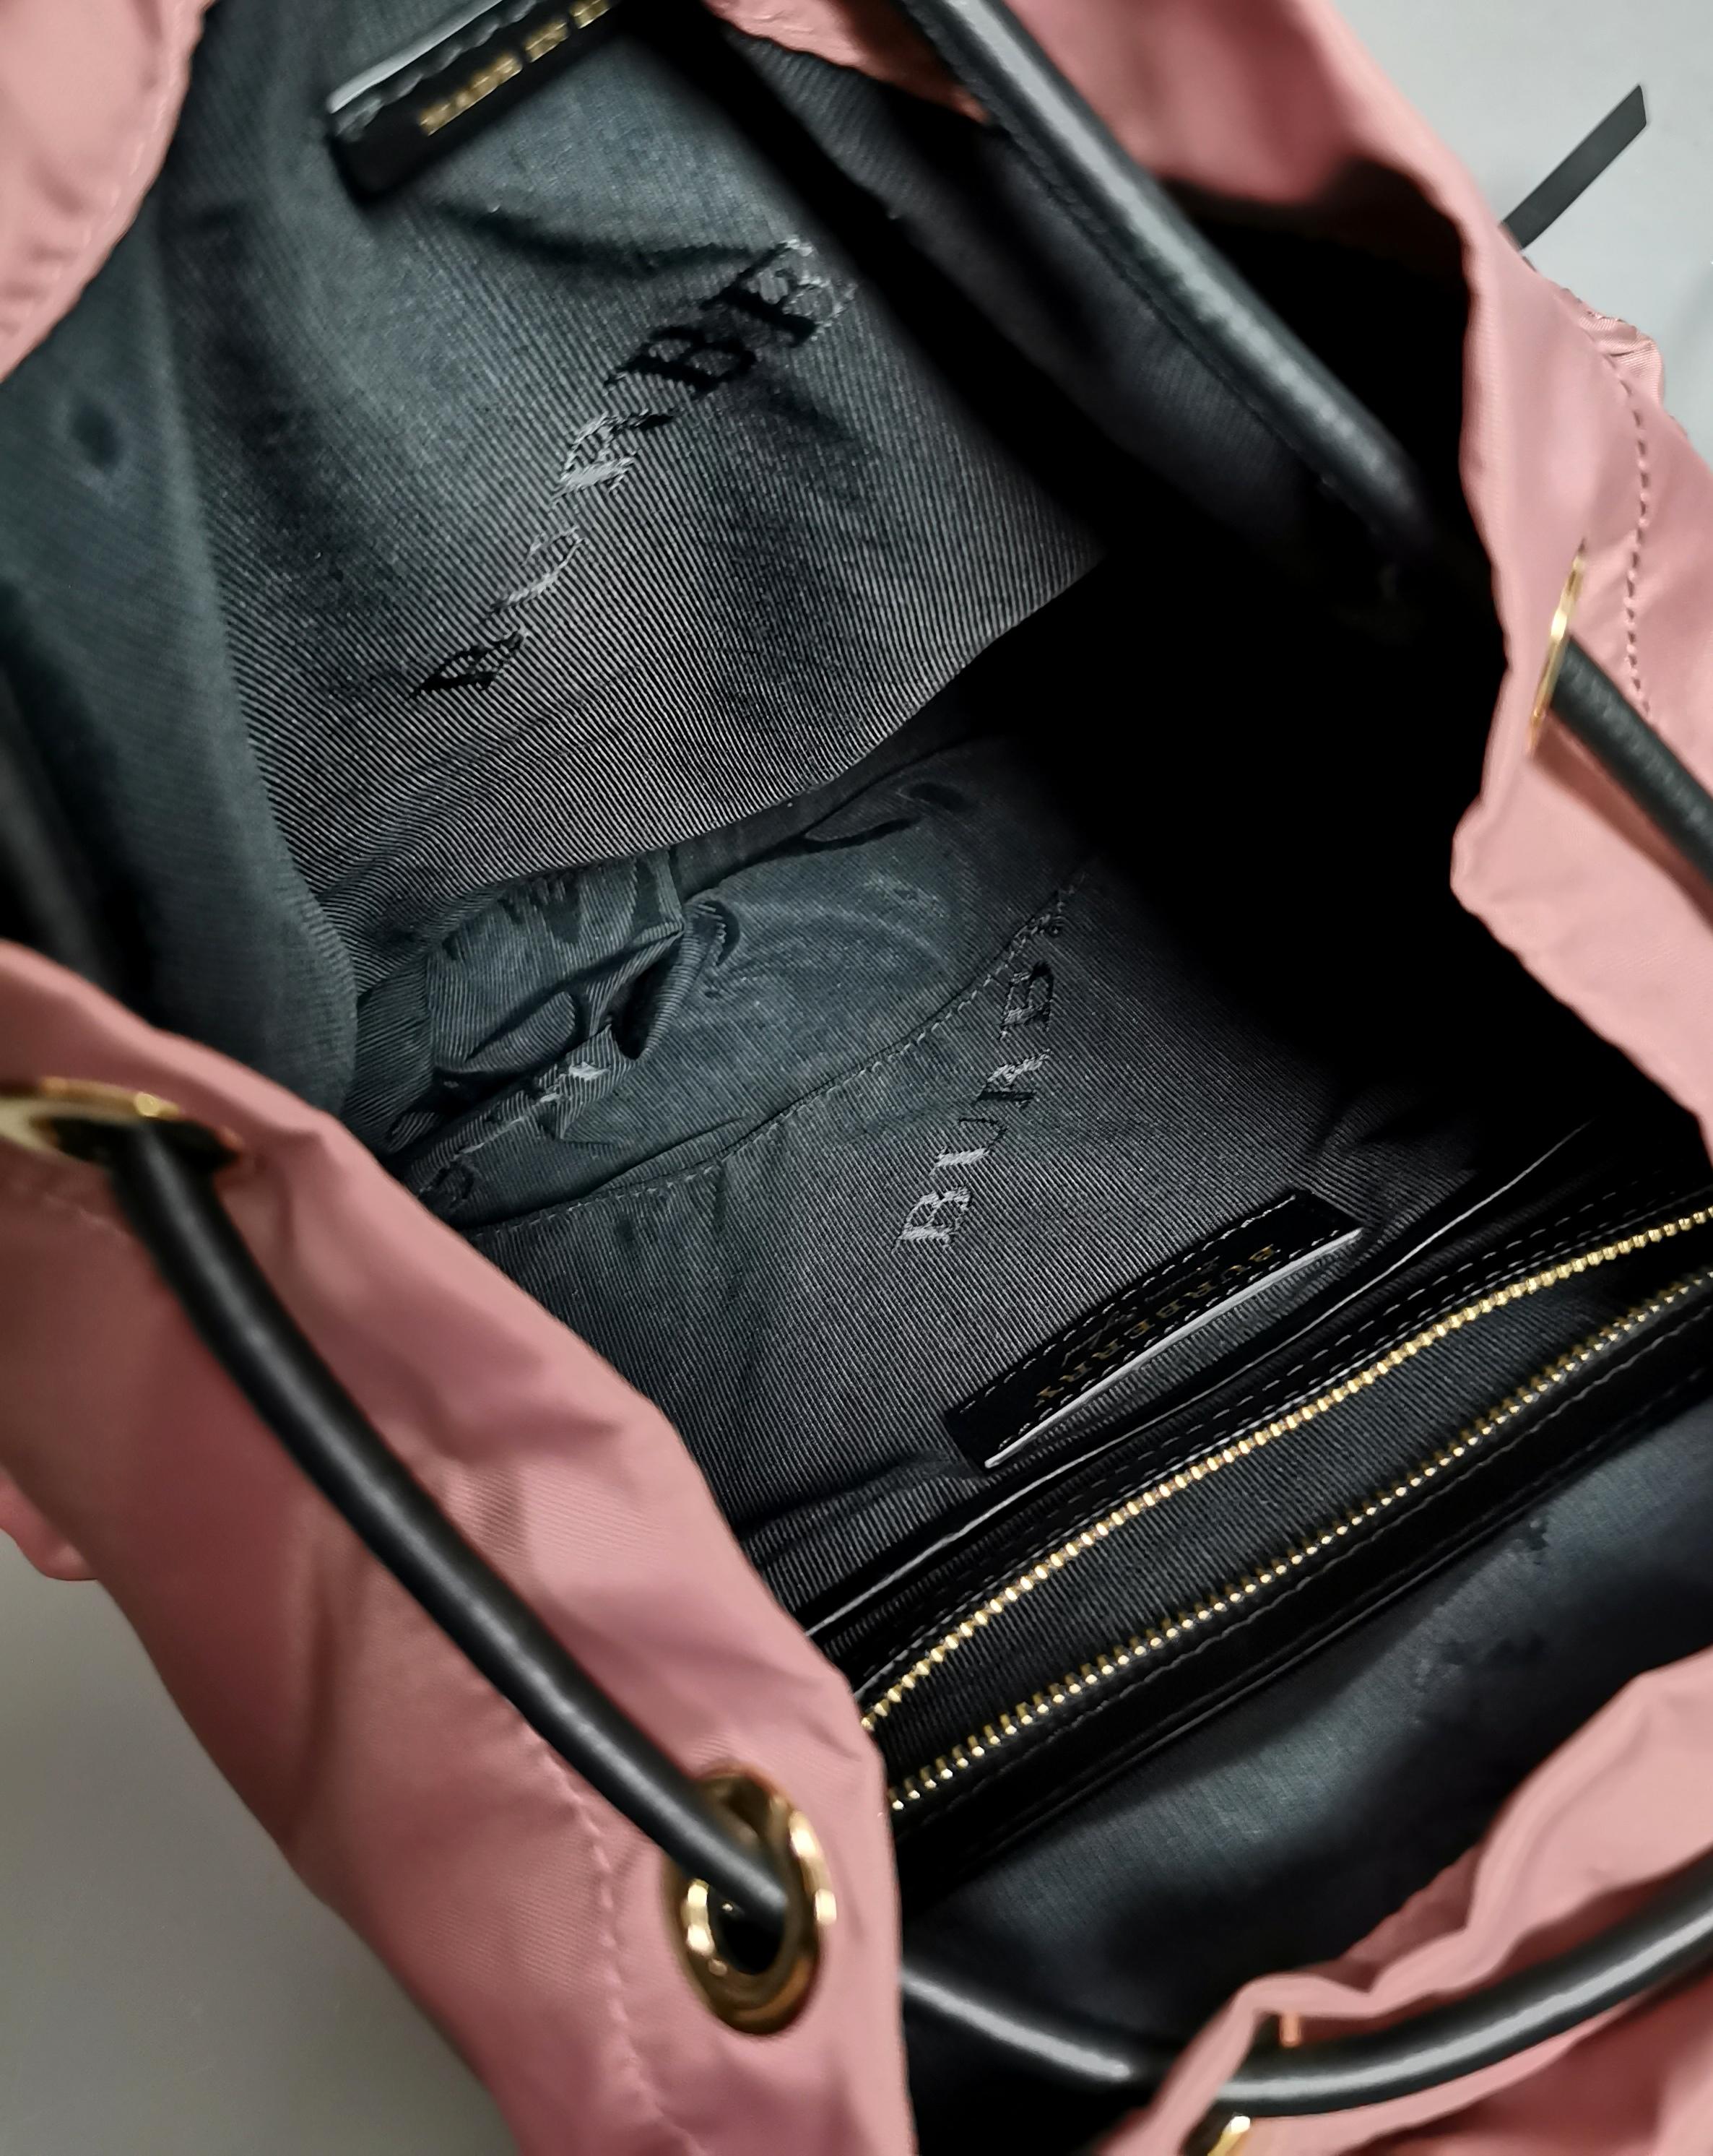 Burberry The Rucksack, pink nylon backpack, gold tone hardware  1